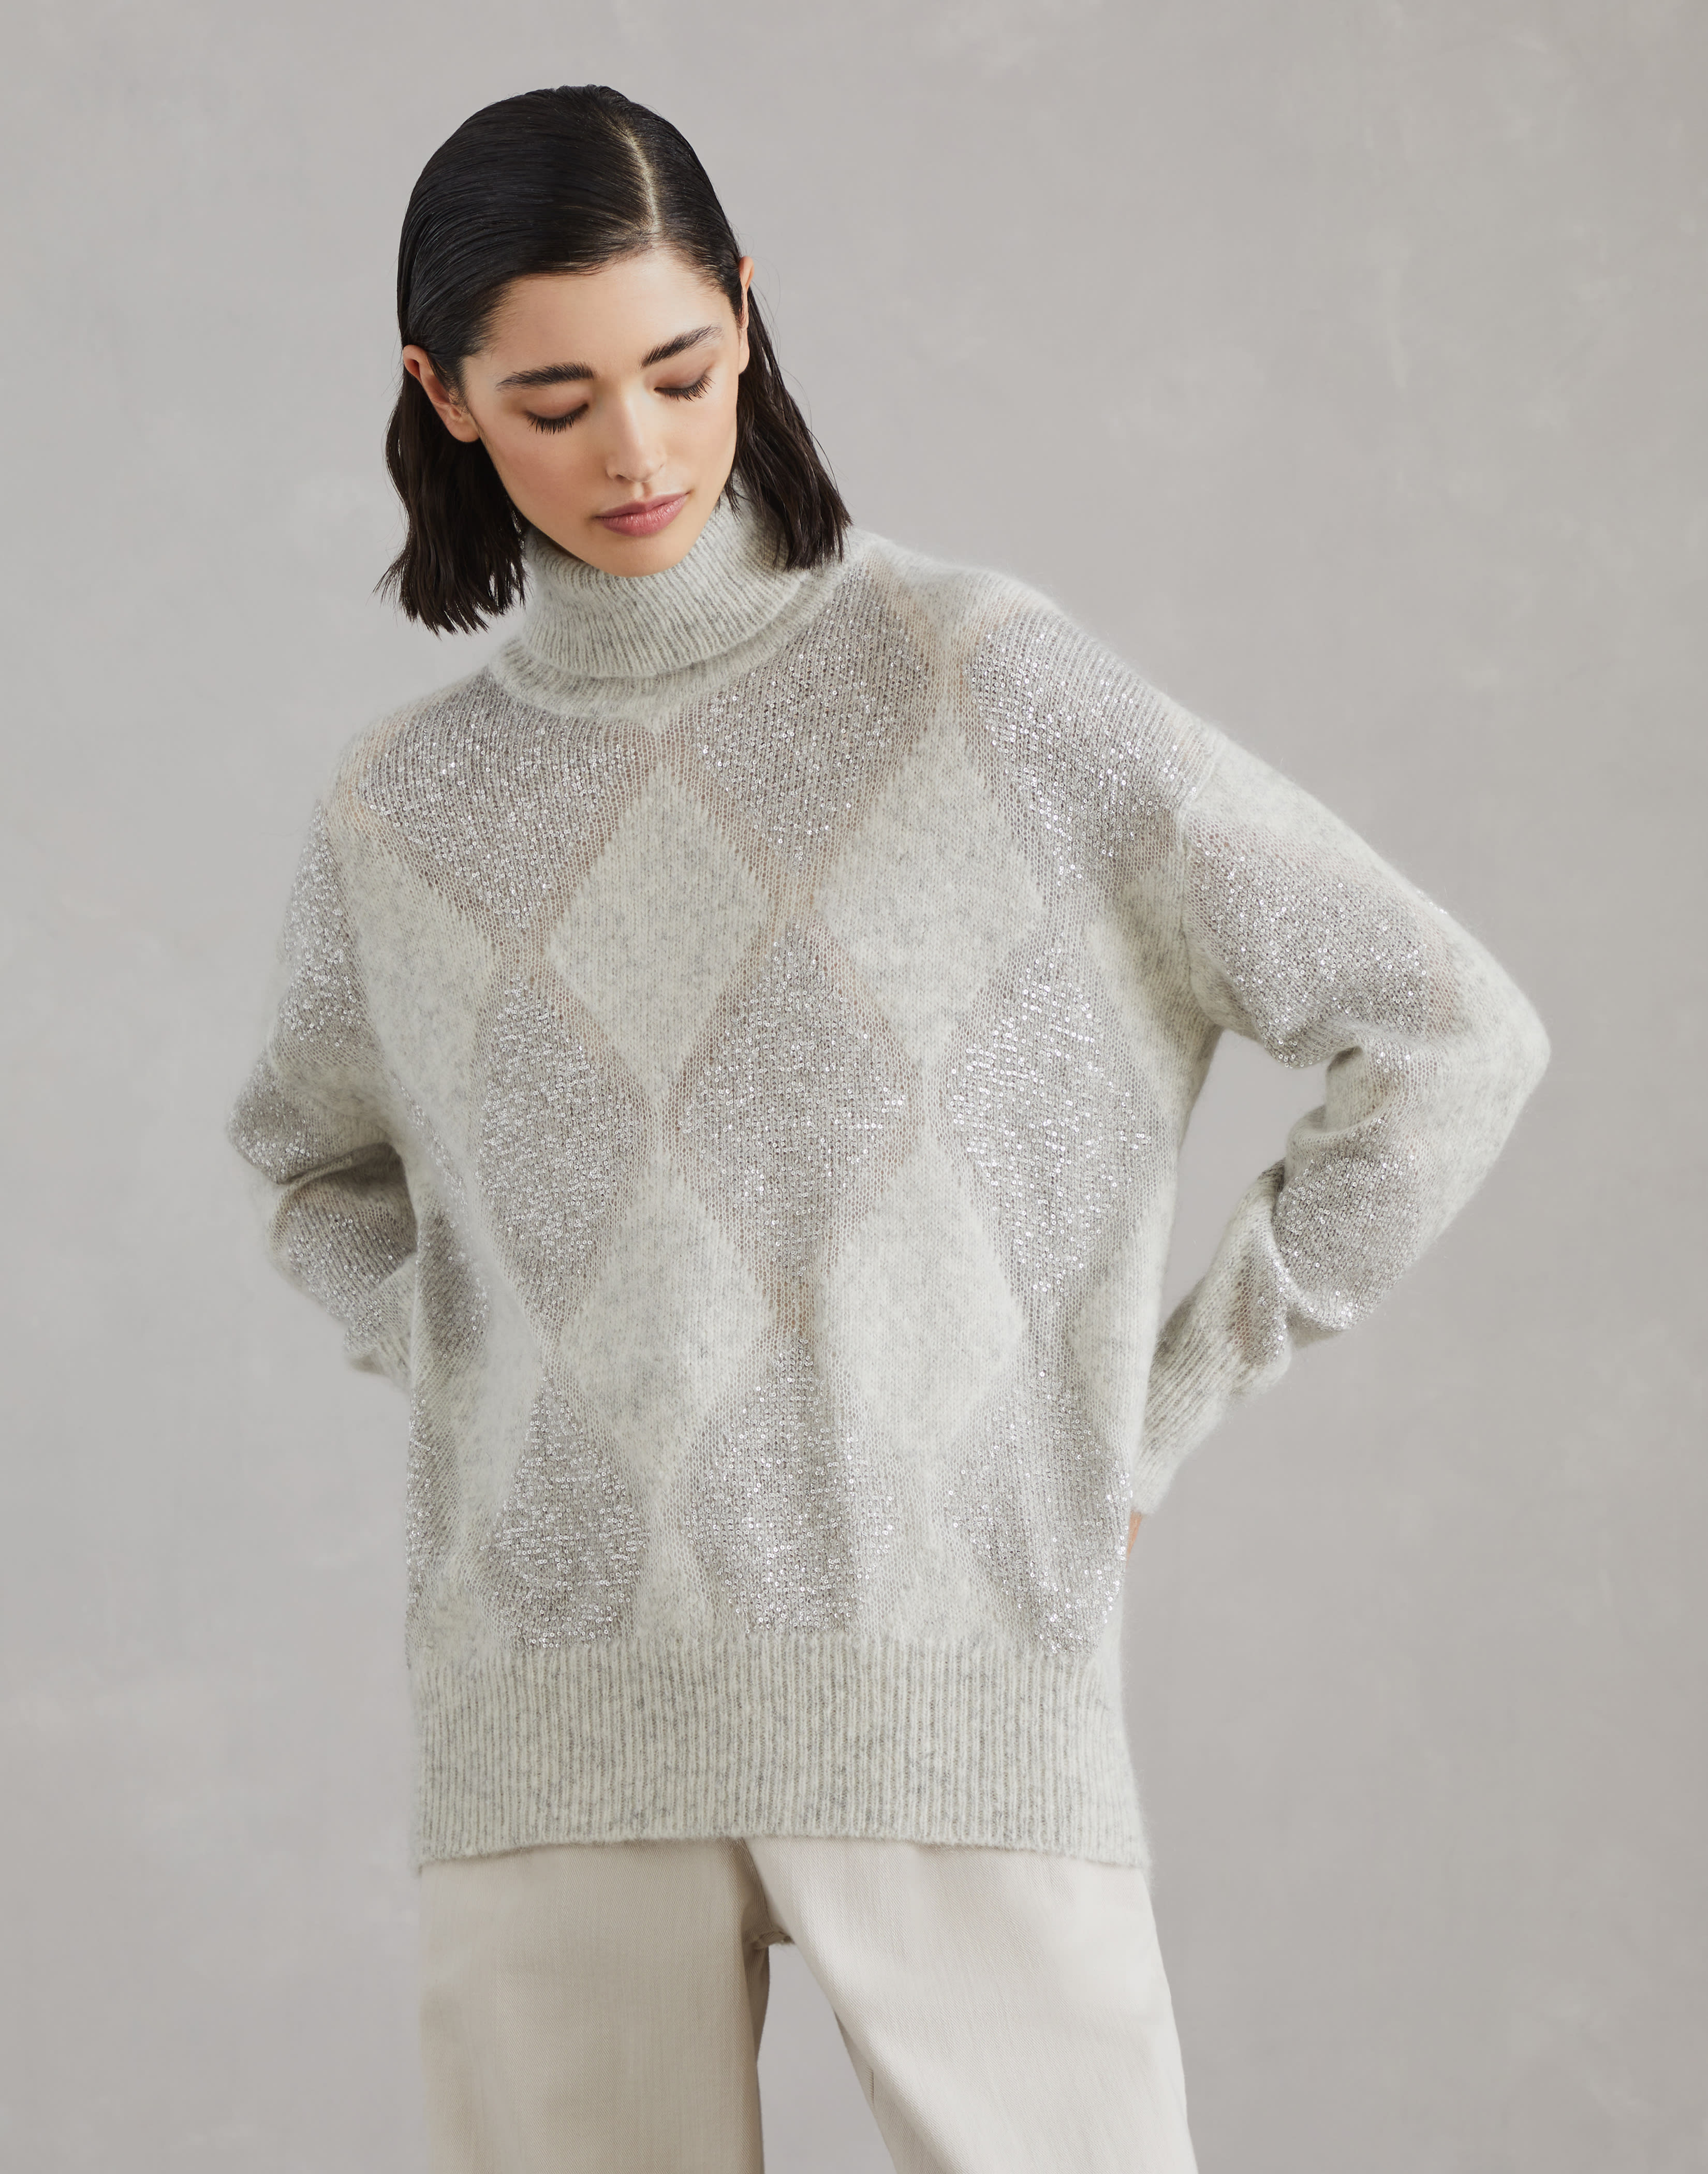 Dazzling Argyle turtleneck sweater